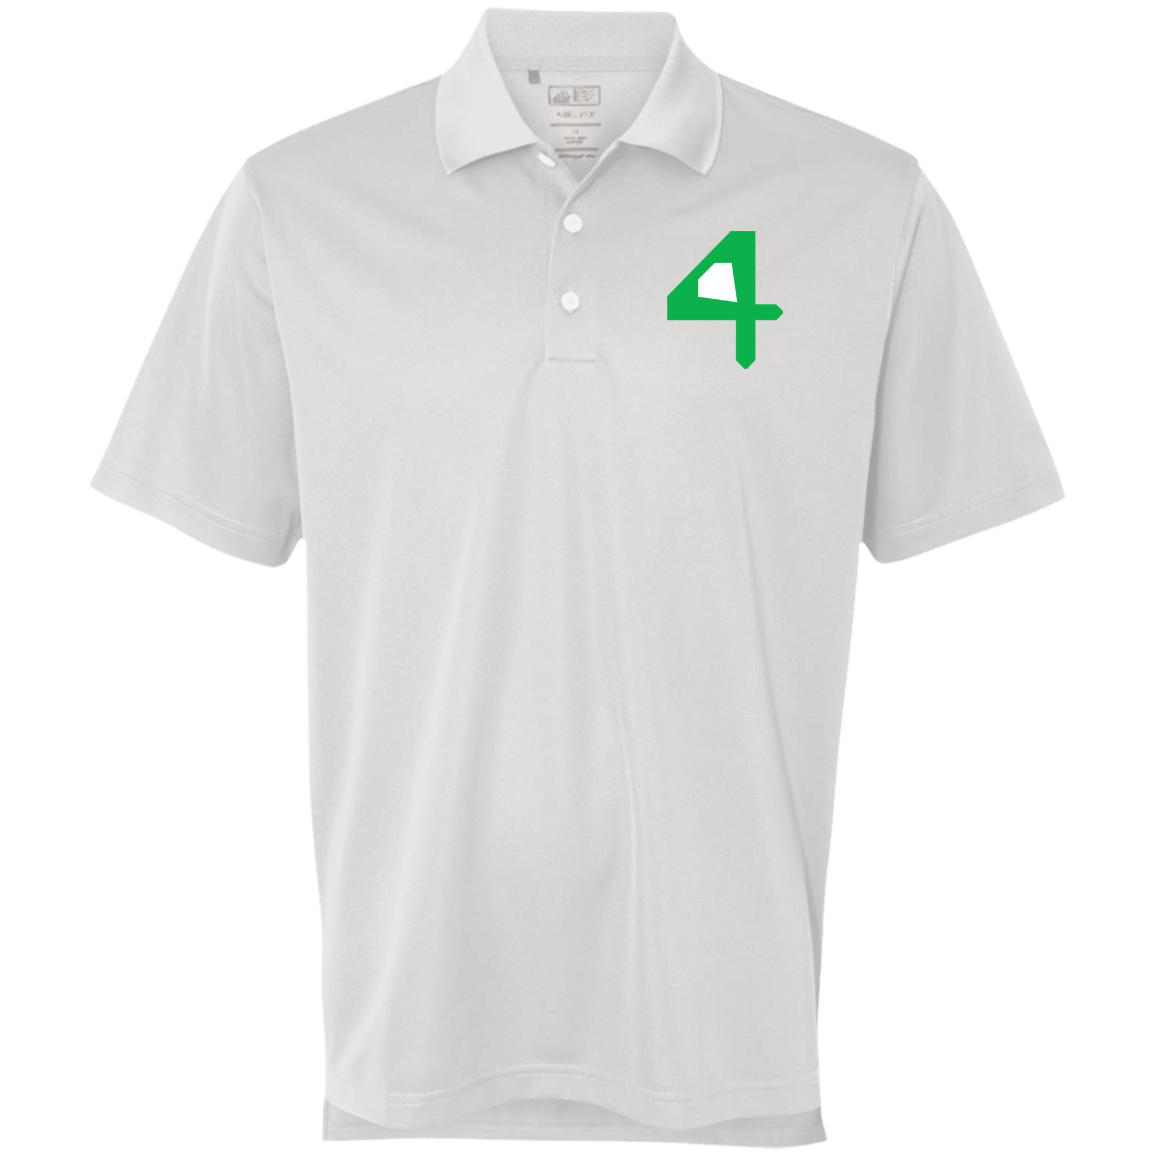 Adidas Green "4" Golf ClimaLite Polo